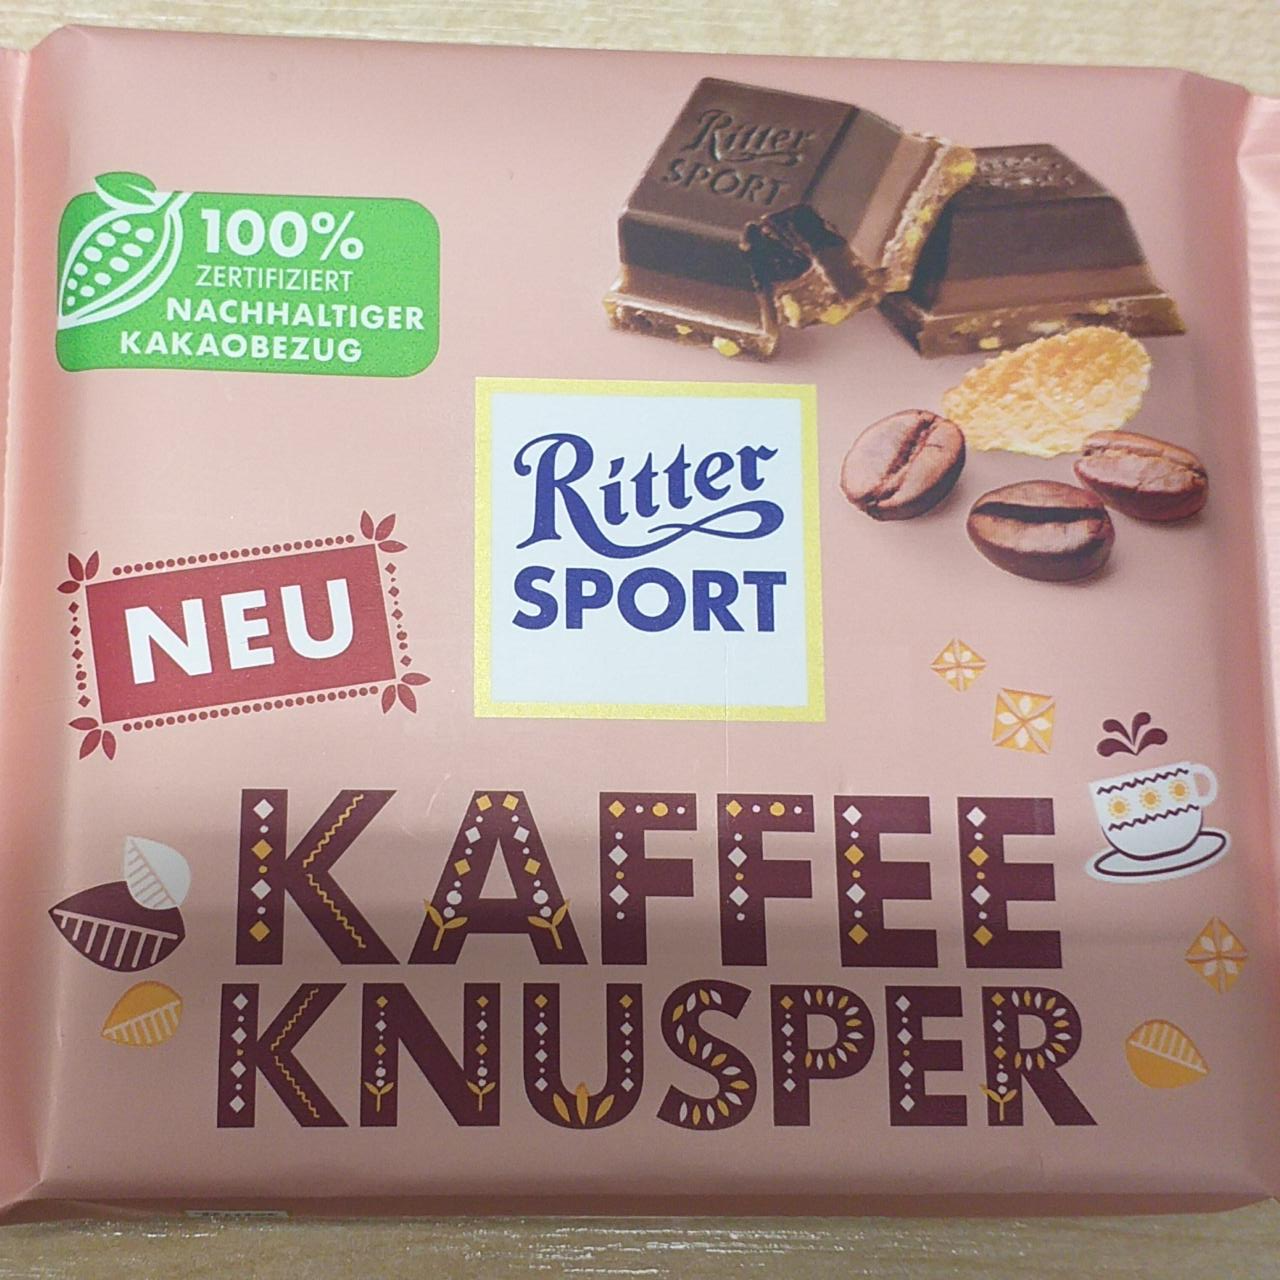 Fotografie - Kaffee knusper Ritter Sport